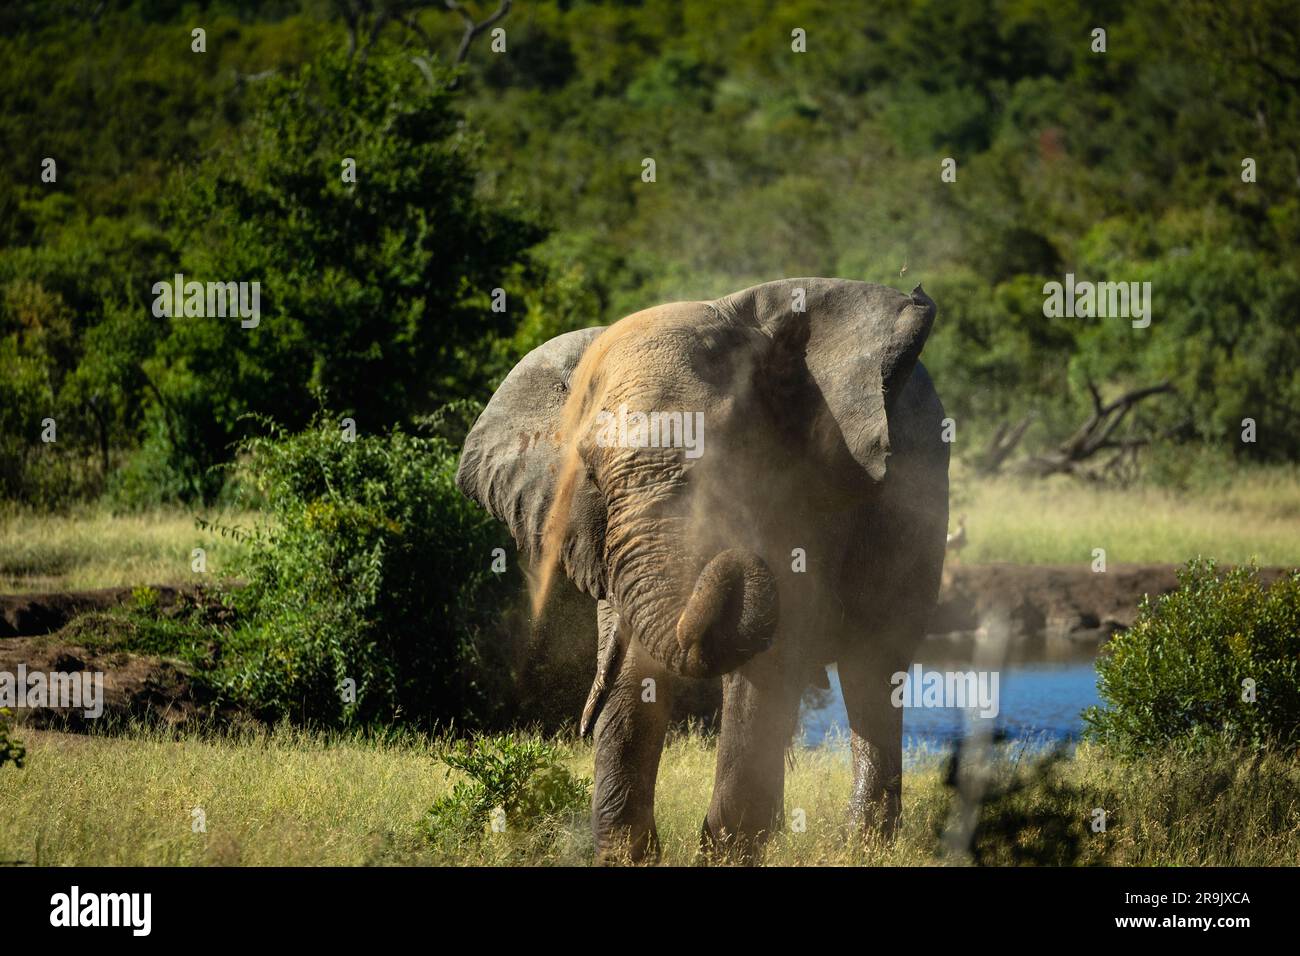 An elephant, Loxodonta africana, dust bathing. Stock Photo